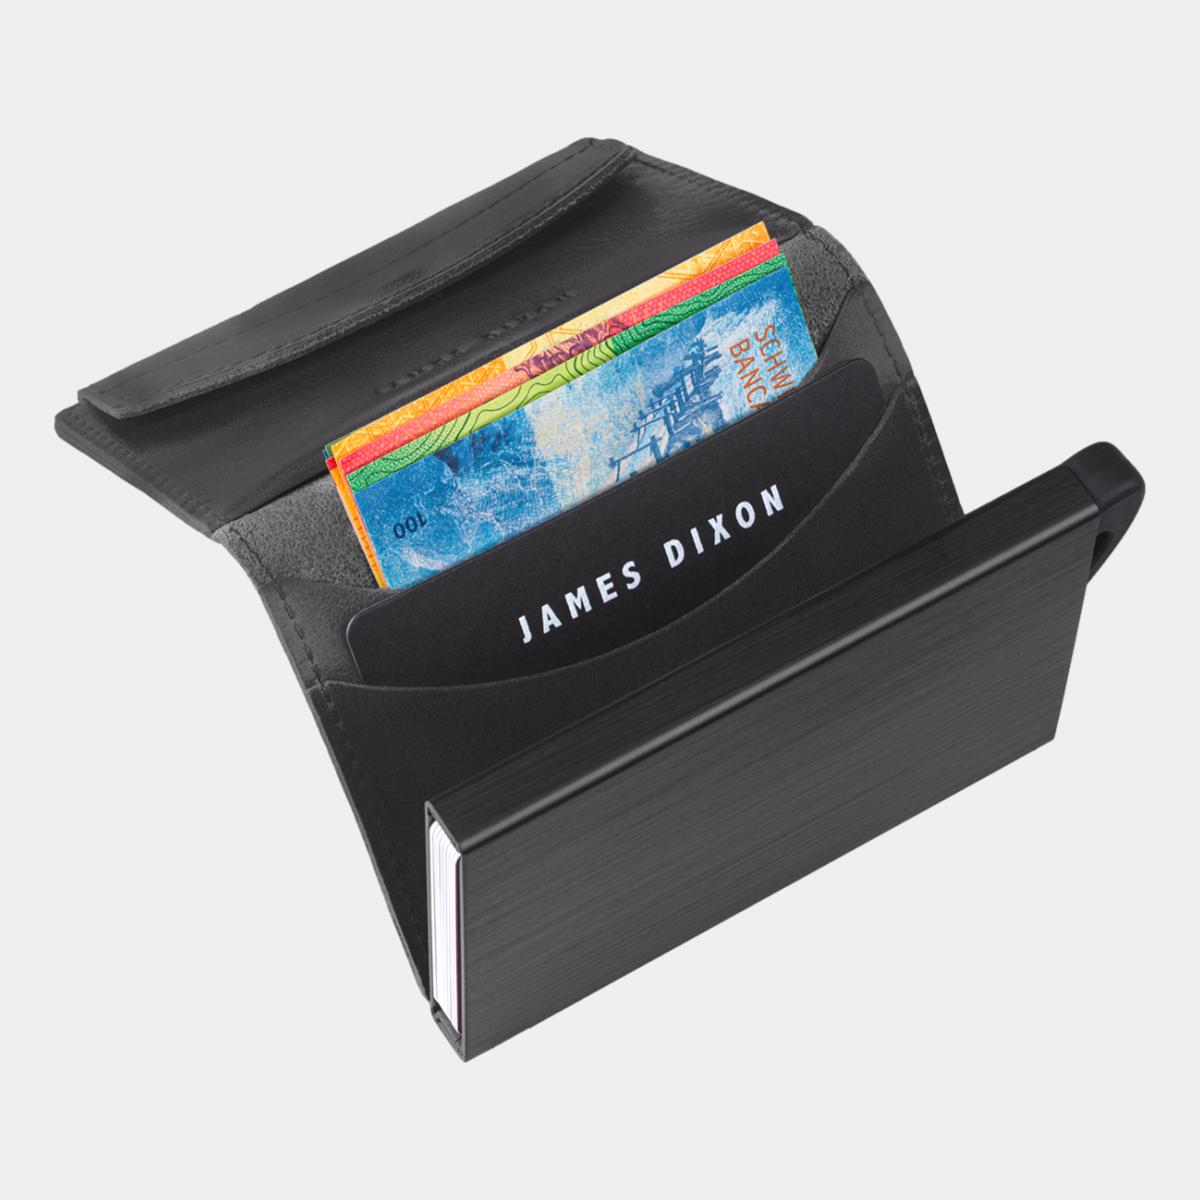 jd0234 james dixon puro vintage all black coin pocket wallet notes